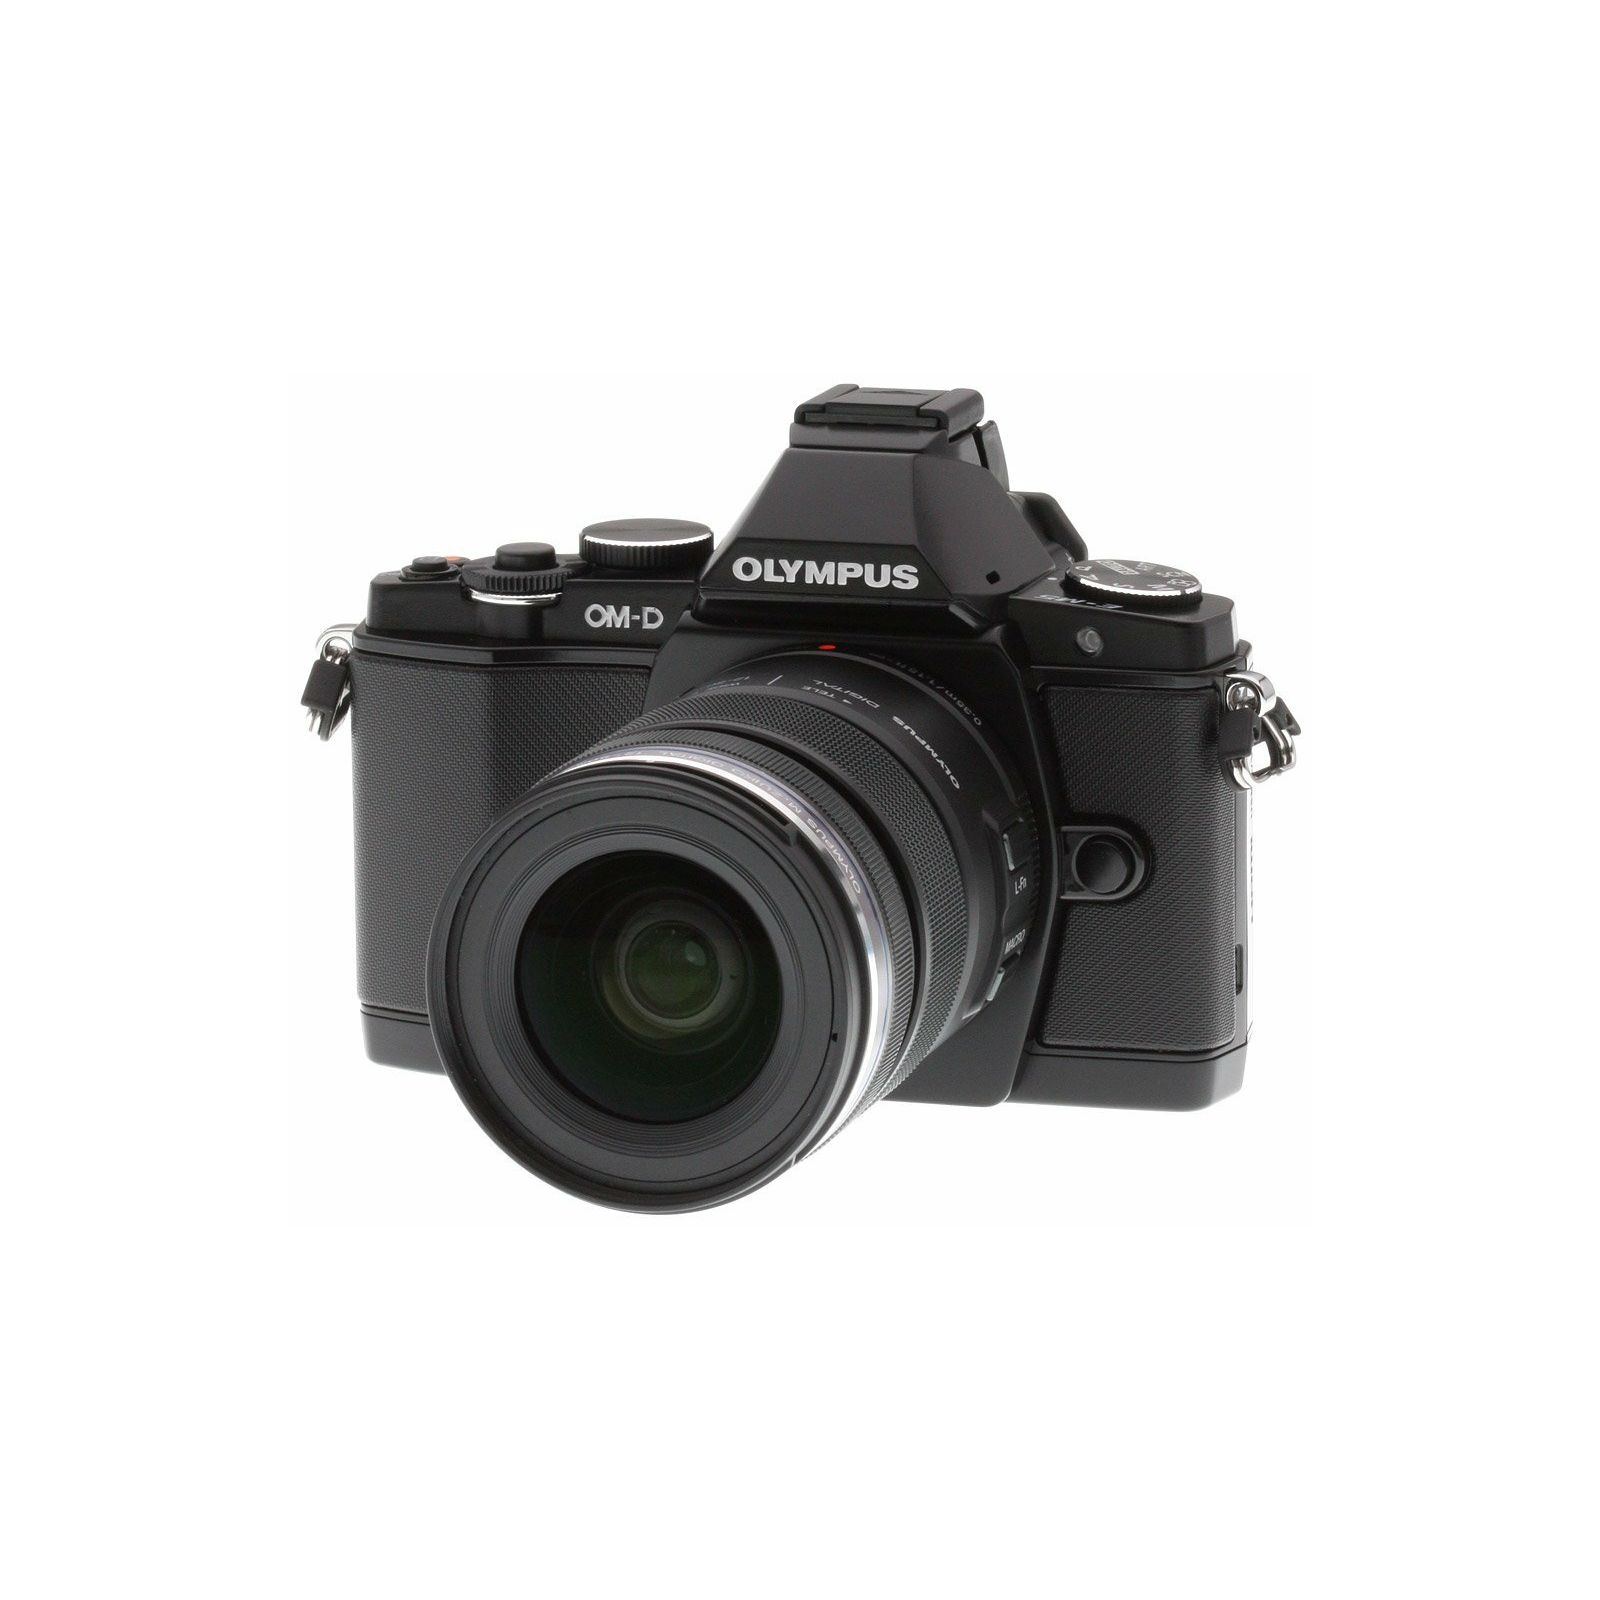 Olympus E-M5 PREMIUM 1250 Kit blk/blk with Strap Micro Four Thirds MFT - OM-D Camera digitalni fotoaparat V204045BE020